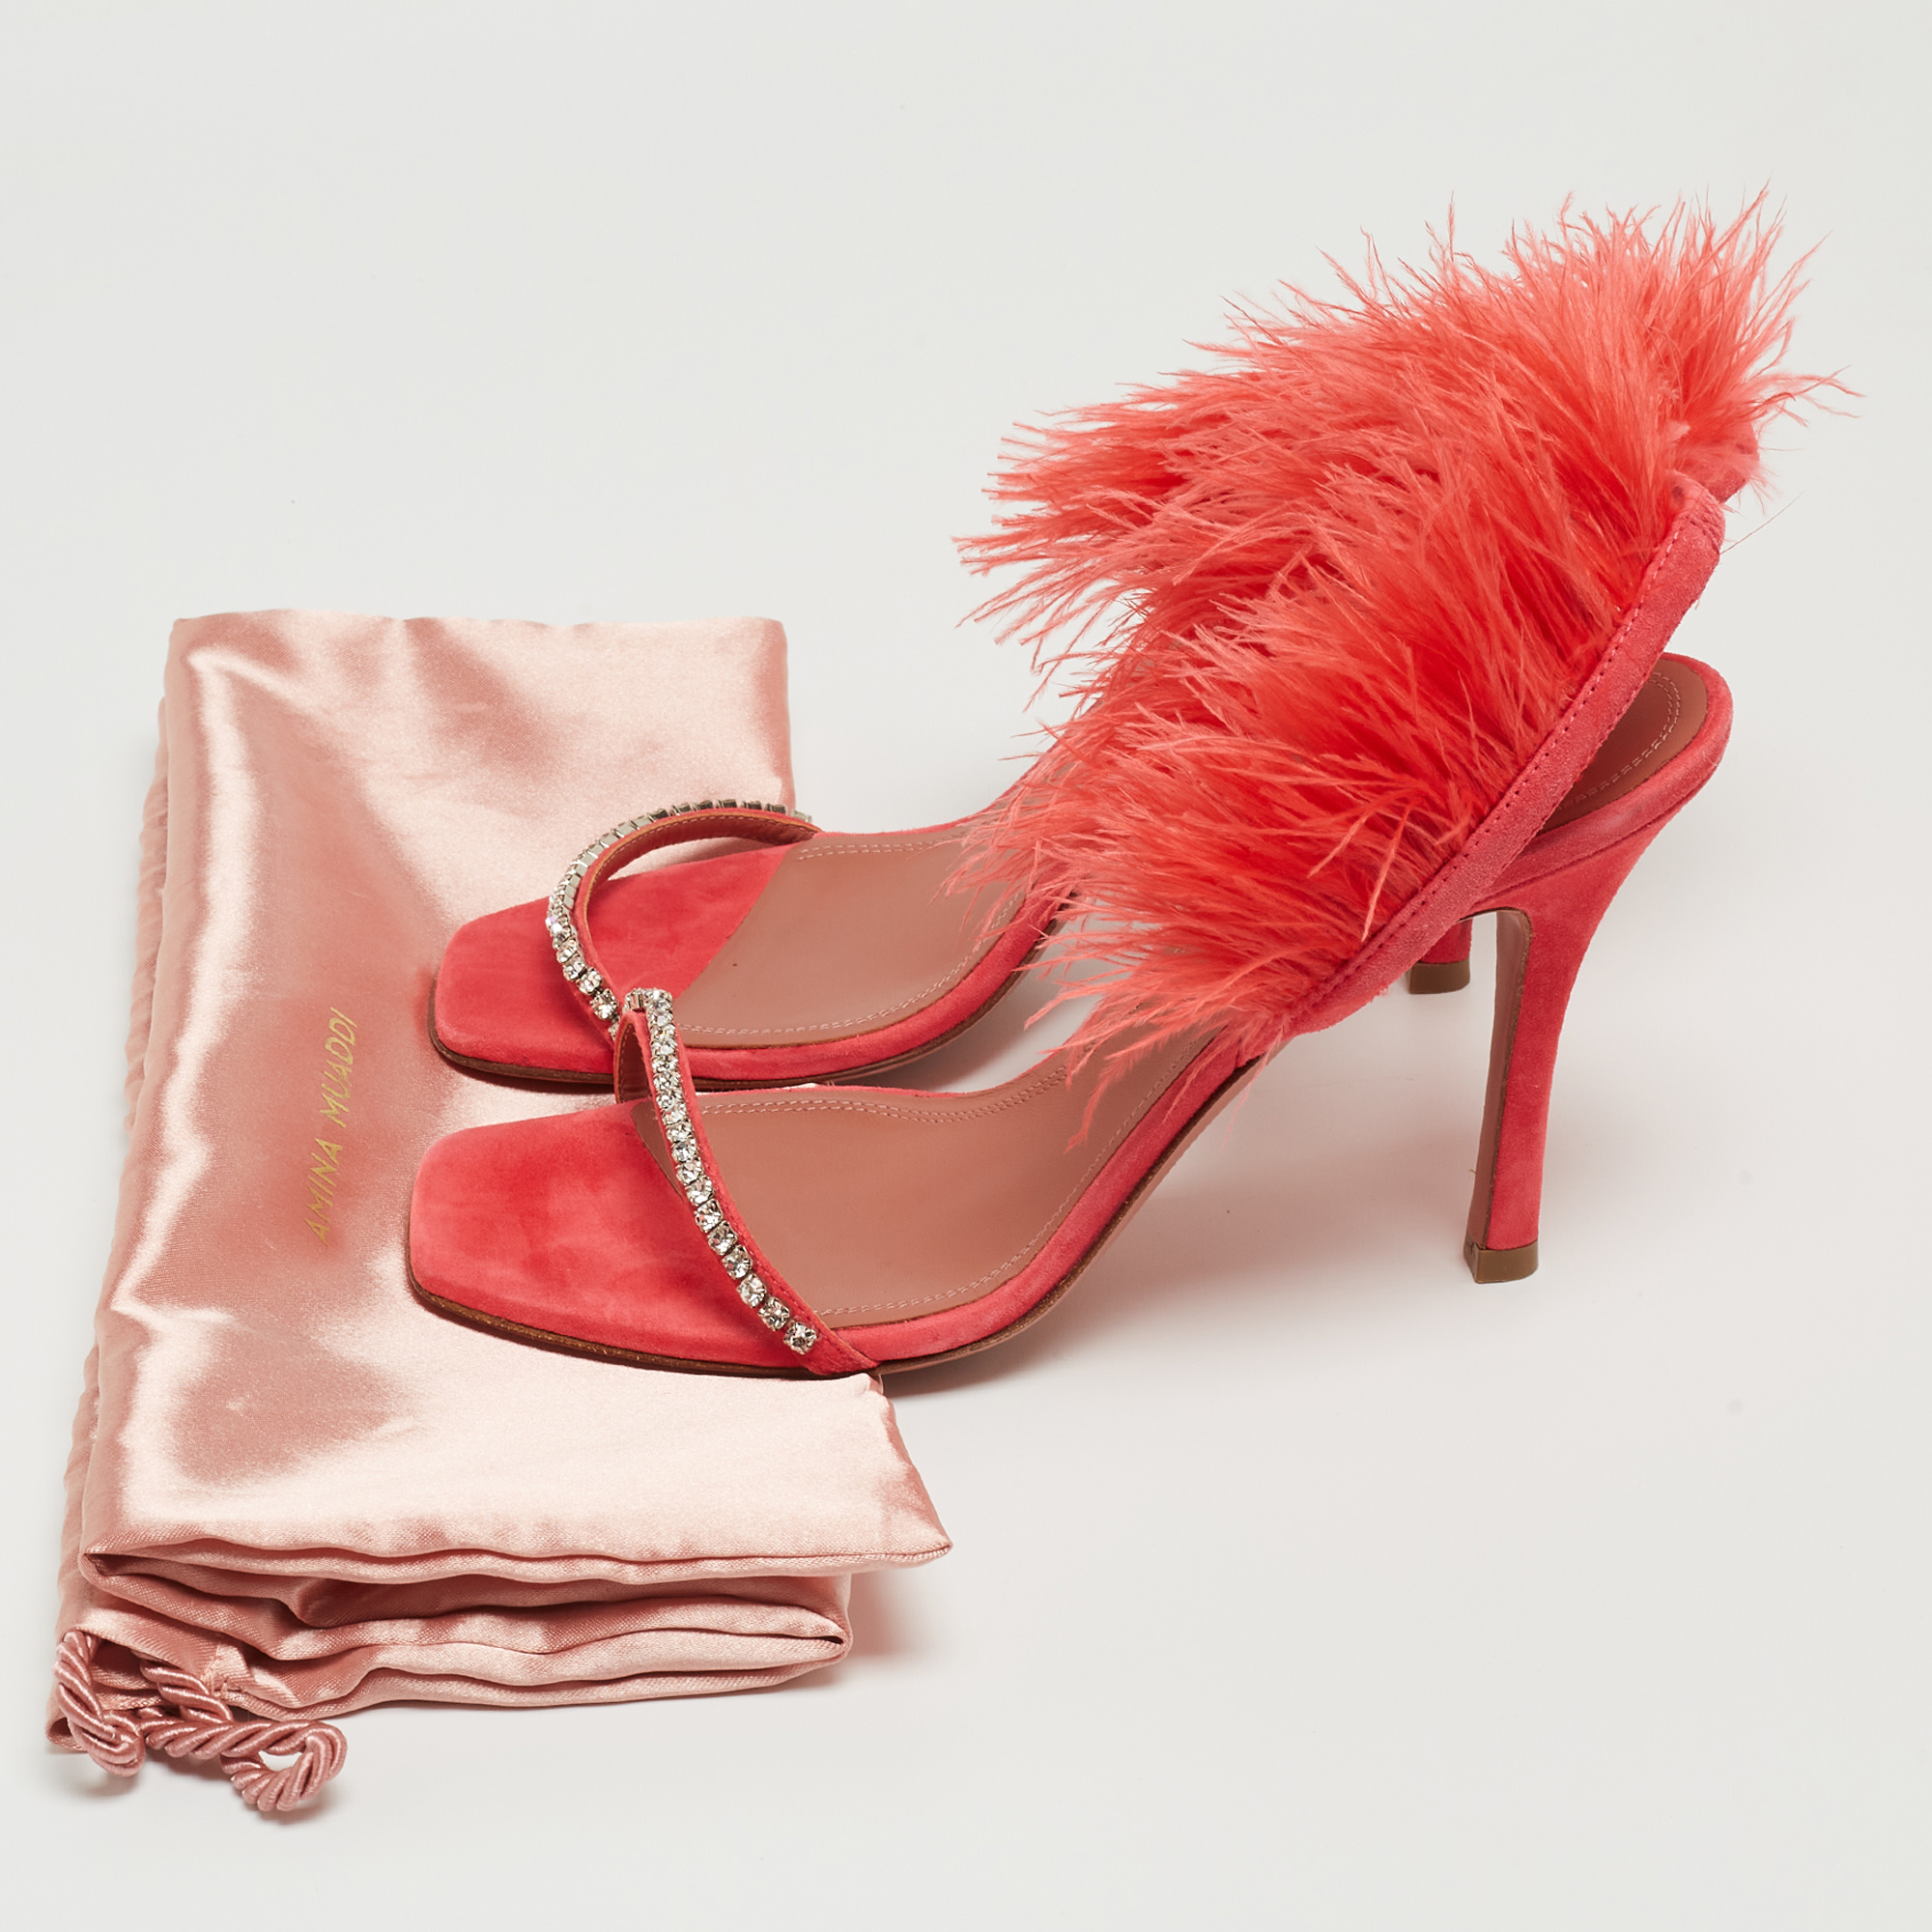 Amina Muaddi Pink Satin And Feather Crystal Embellished Adwoa Slingback Sandals Size 37.5